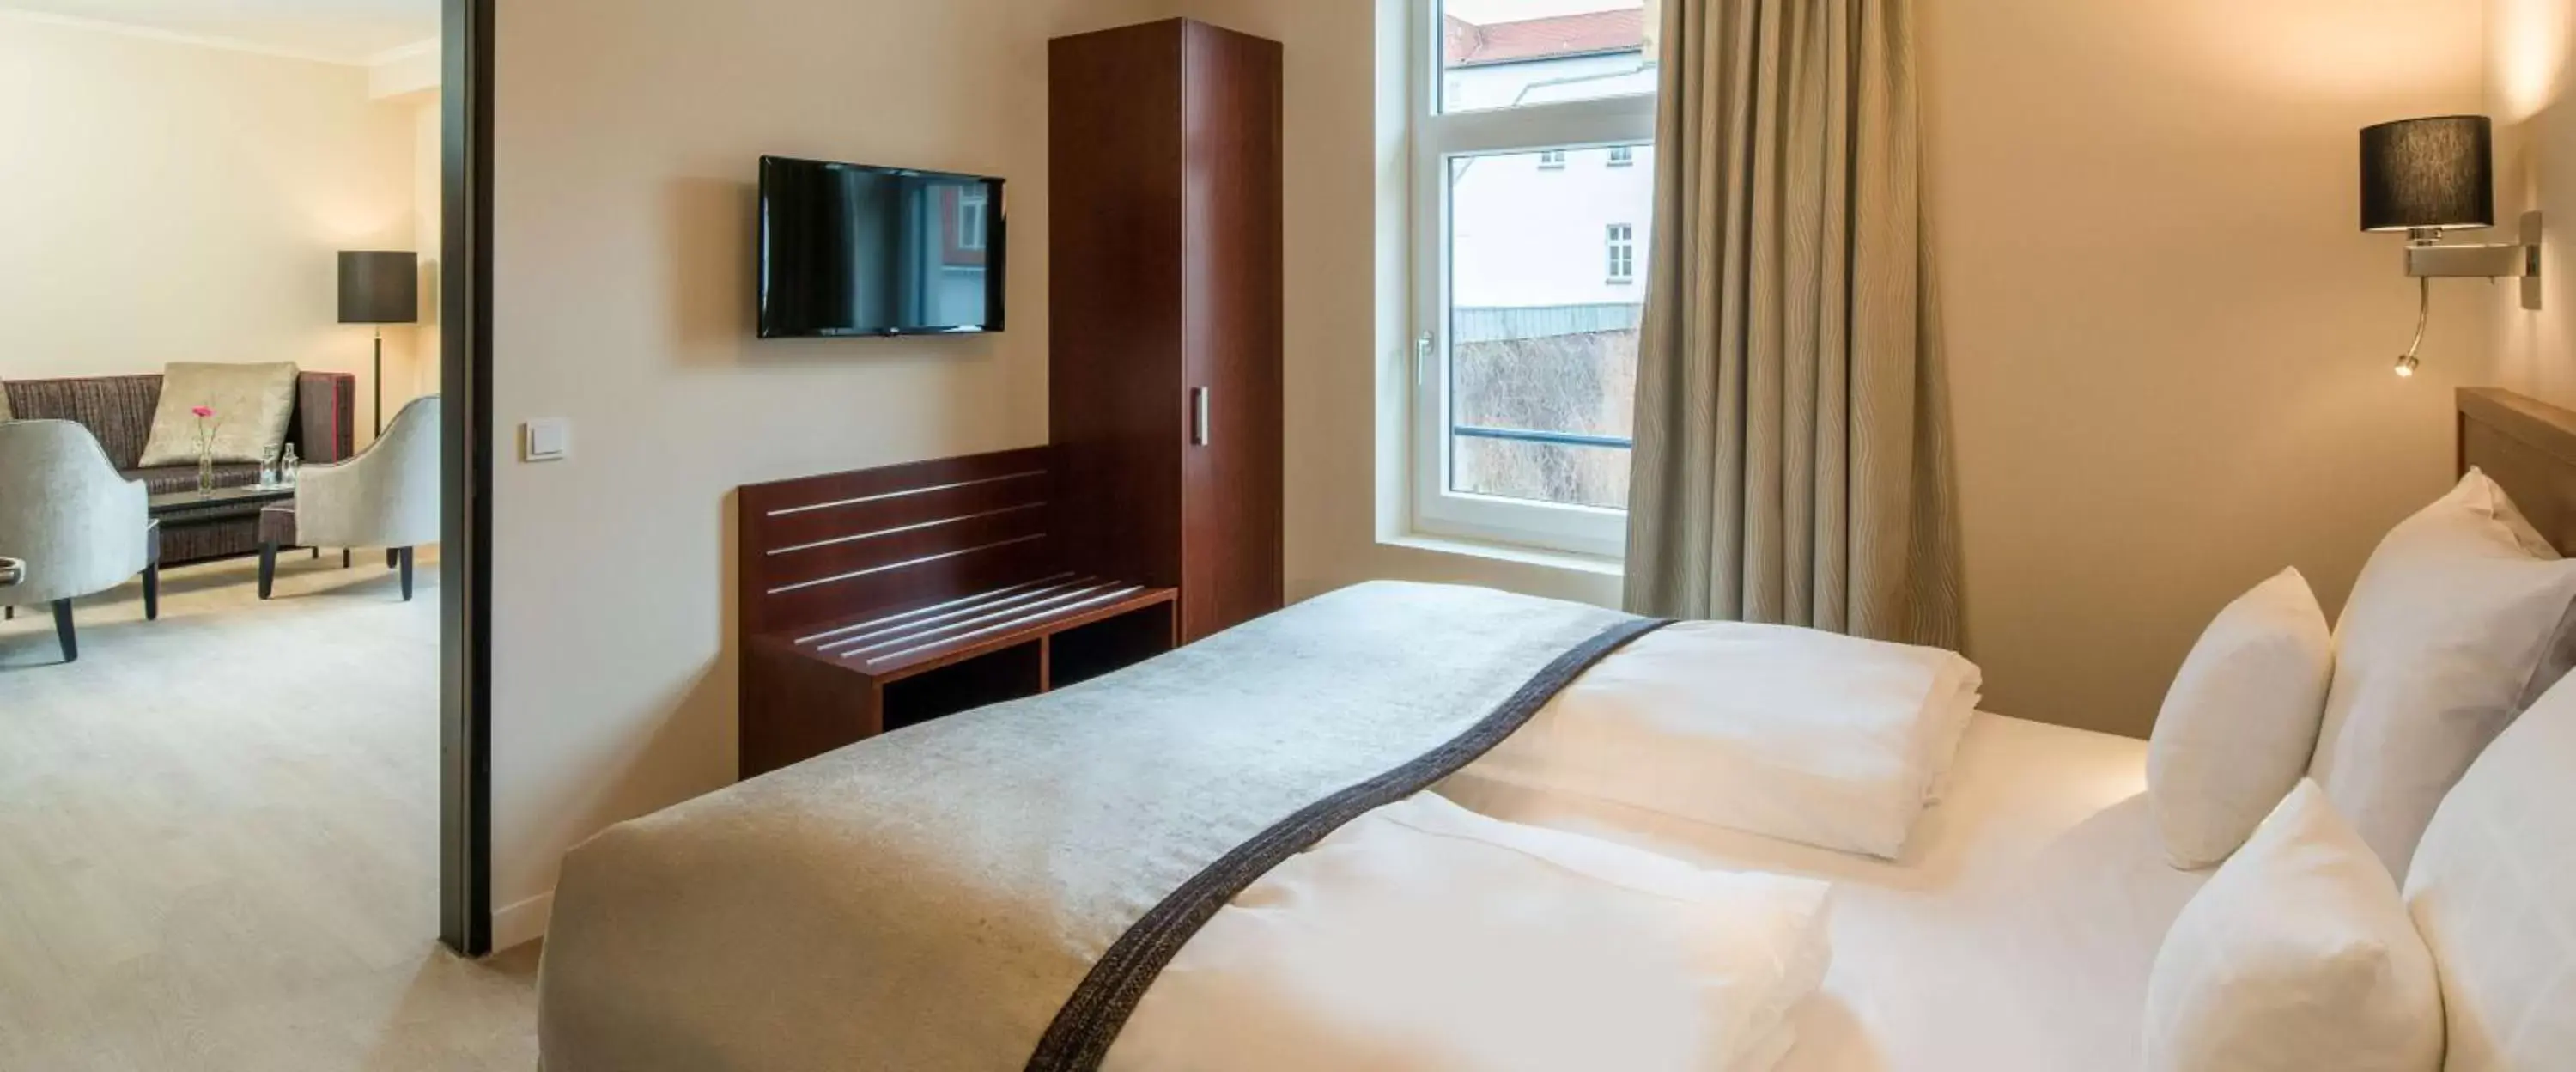 Bedroom, Bed in Best Western Plus Hotel Excelsior